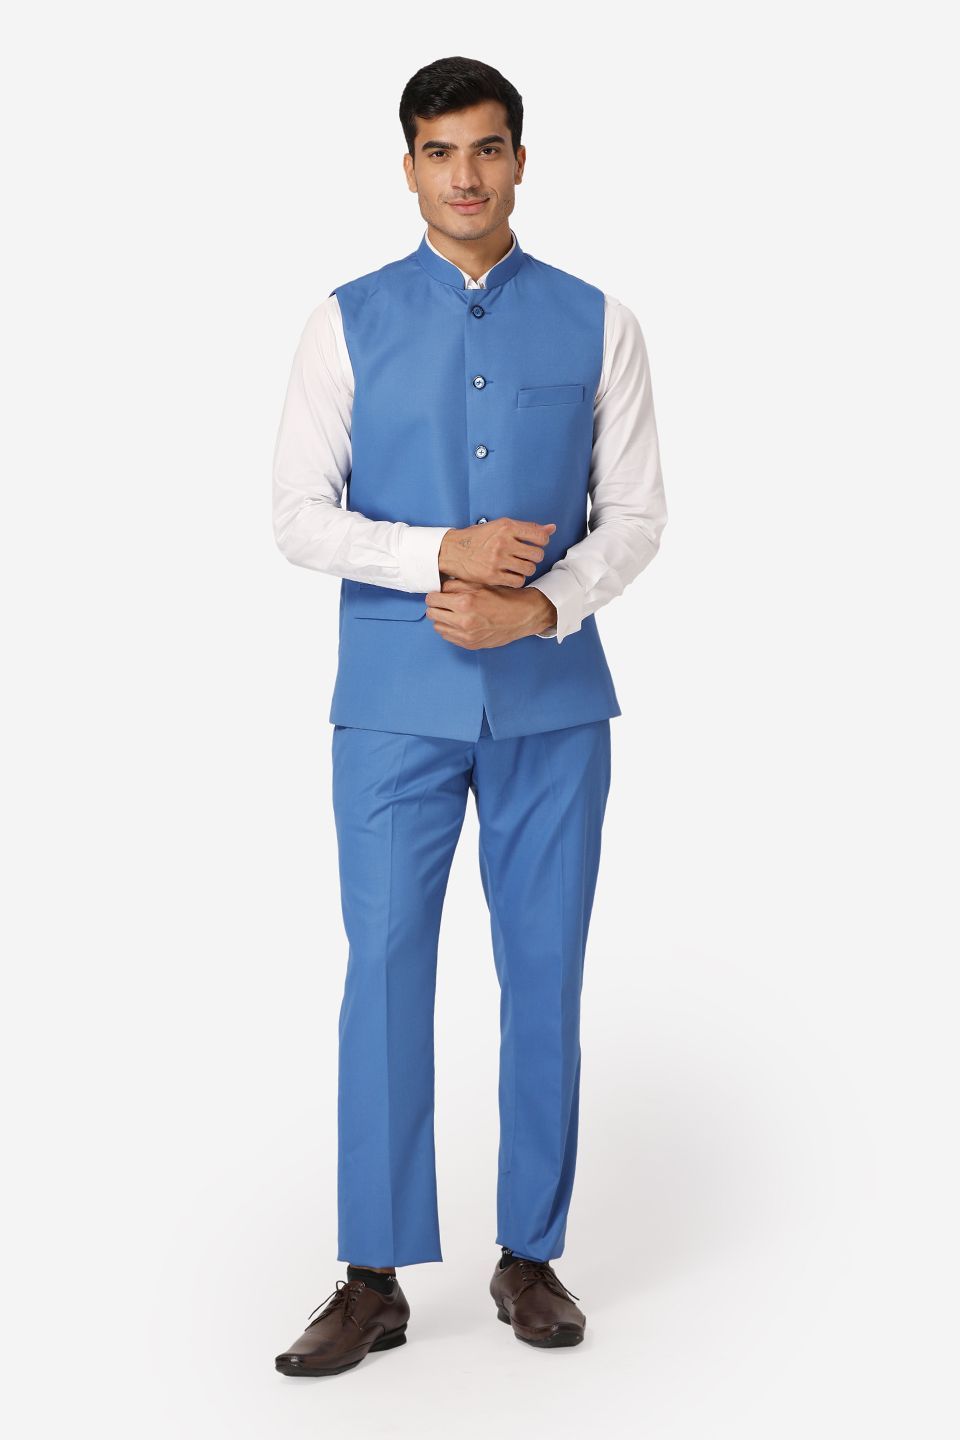 WINTAGE Men's Poly Cotton Casual and Evening Vest & Pant Set : Light Blue